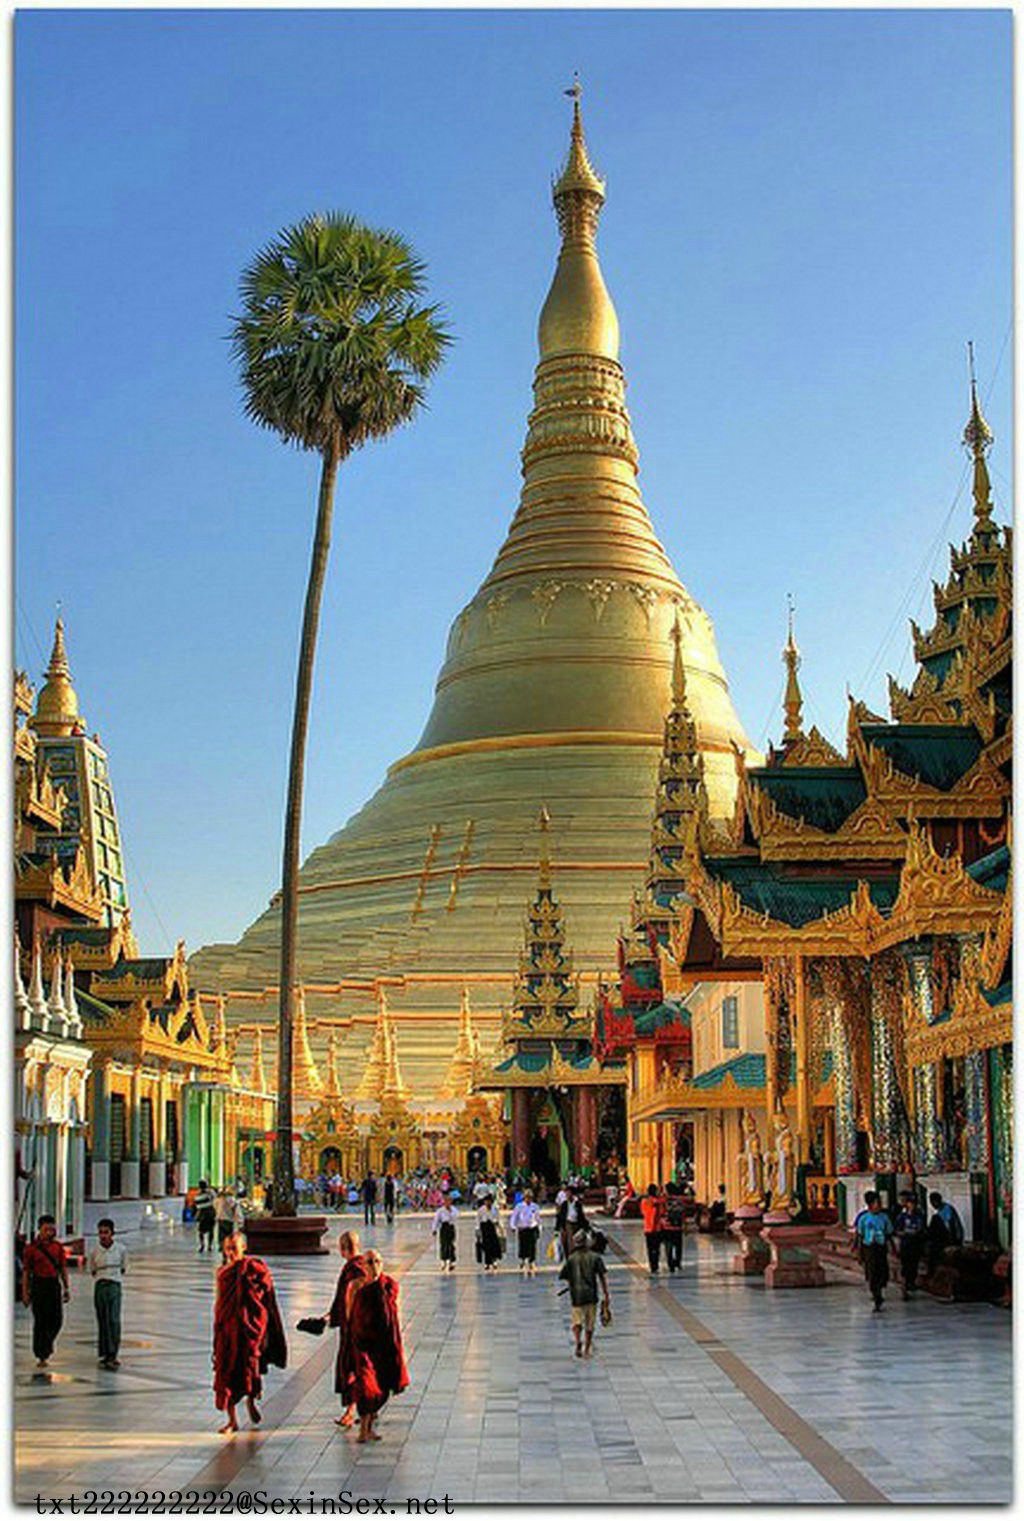 Янгон мьянма. Янгон храм Шведагон. Храмовый комплекс Шведагон в Мьянме. Пагода Шведагон Янгон. Мьянма Золотая ступа.